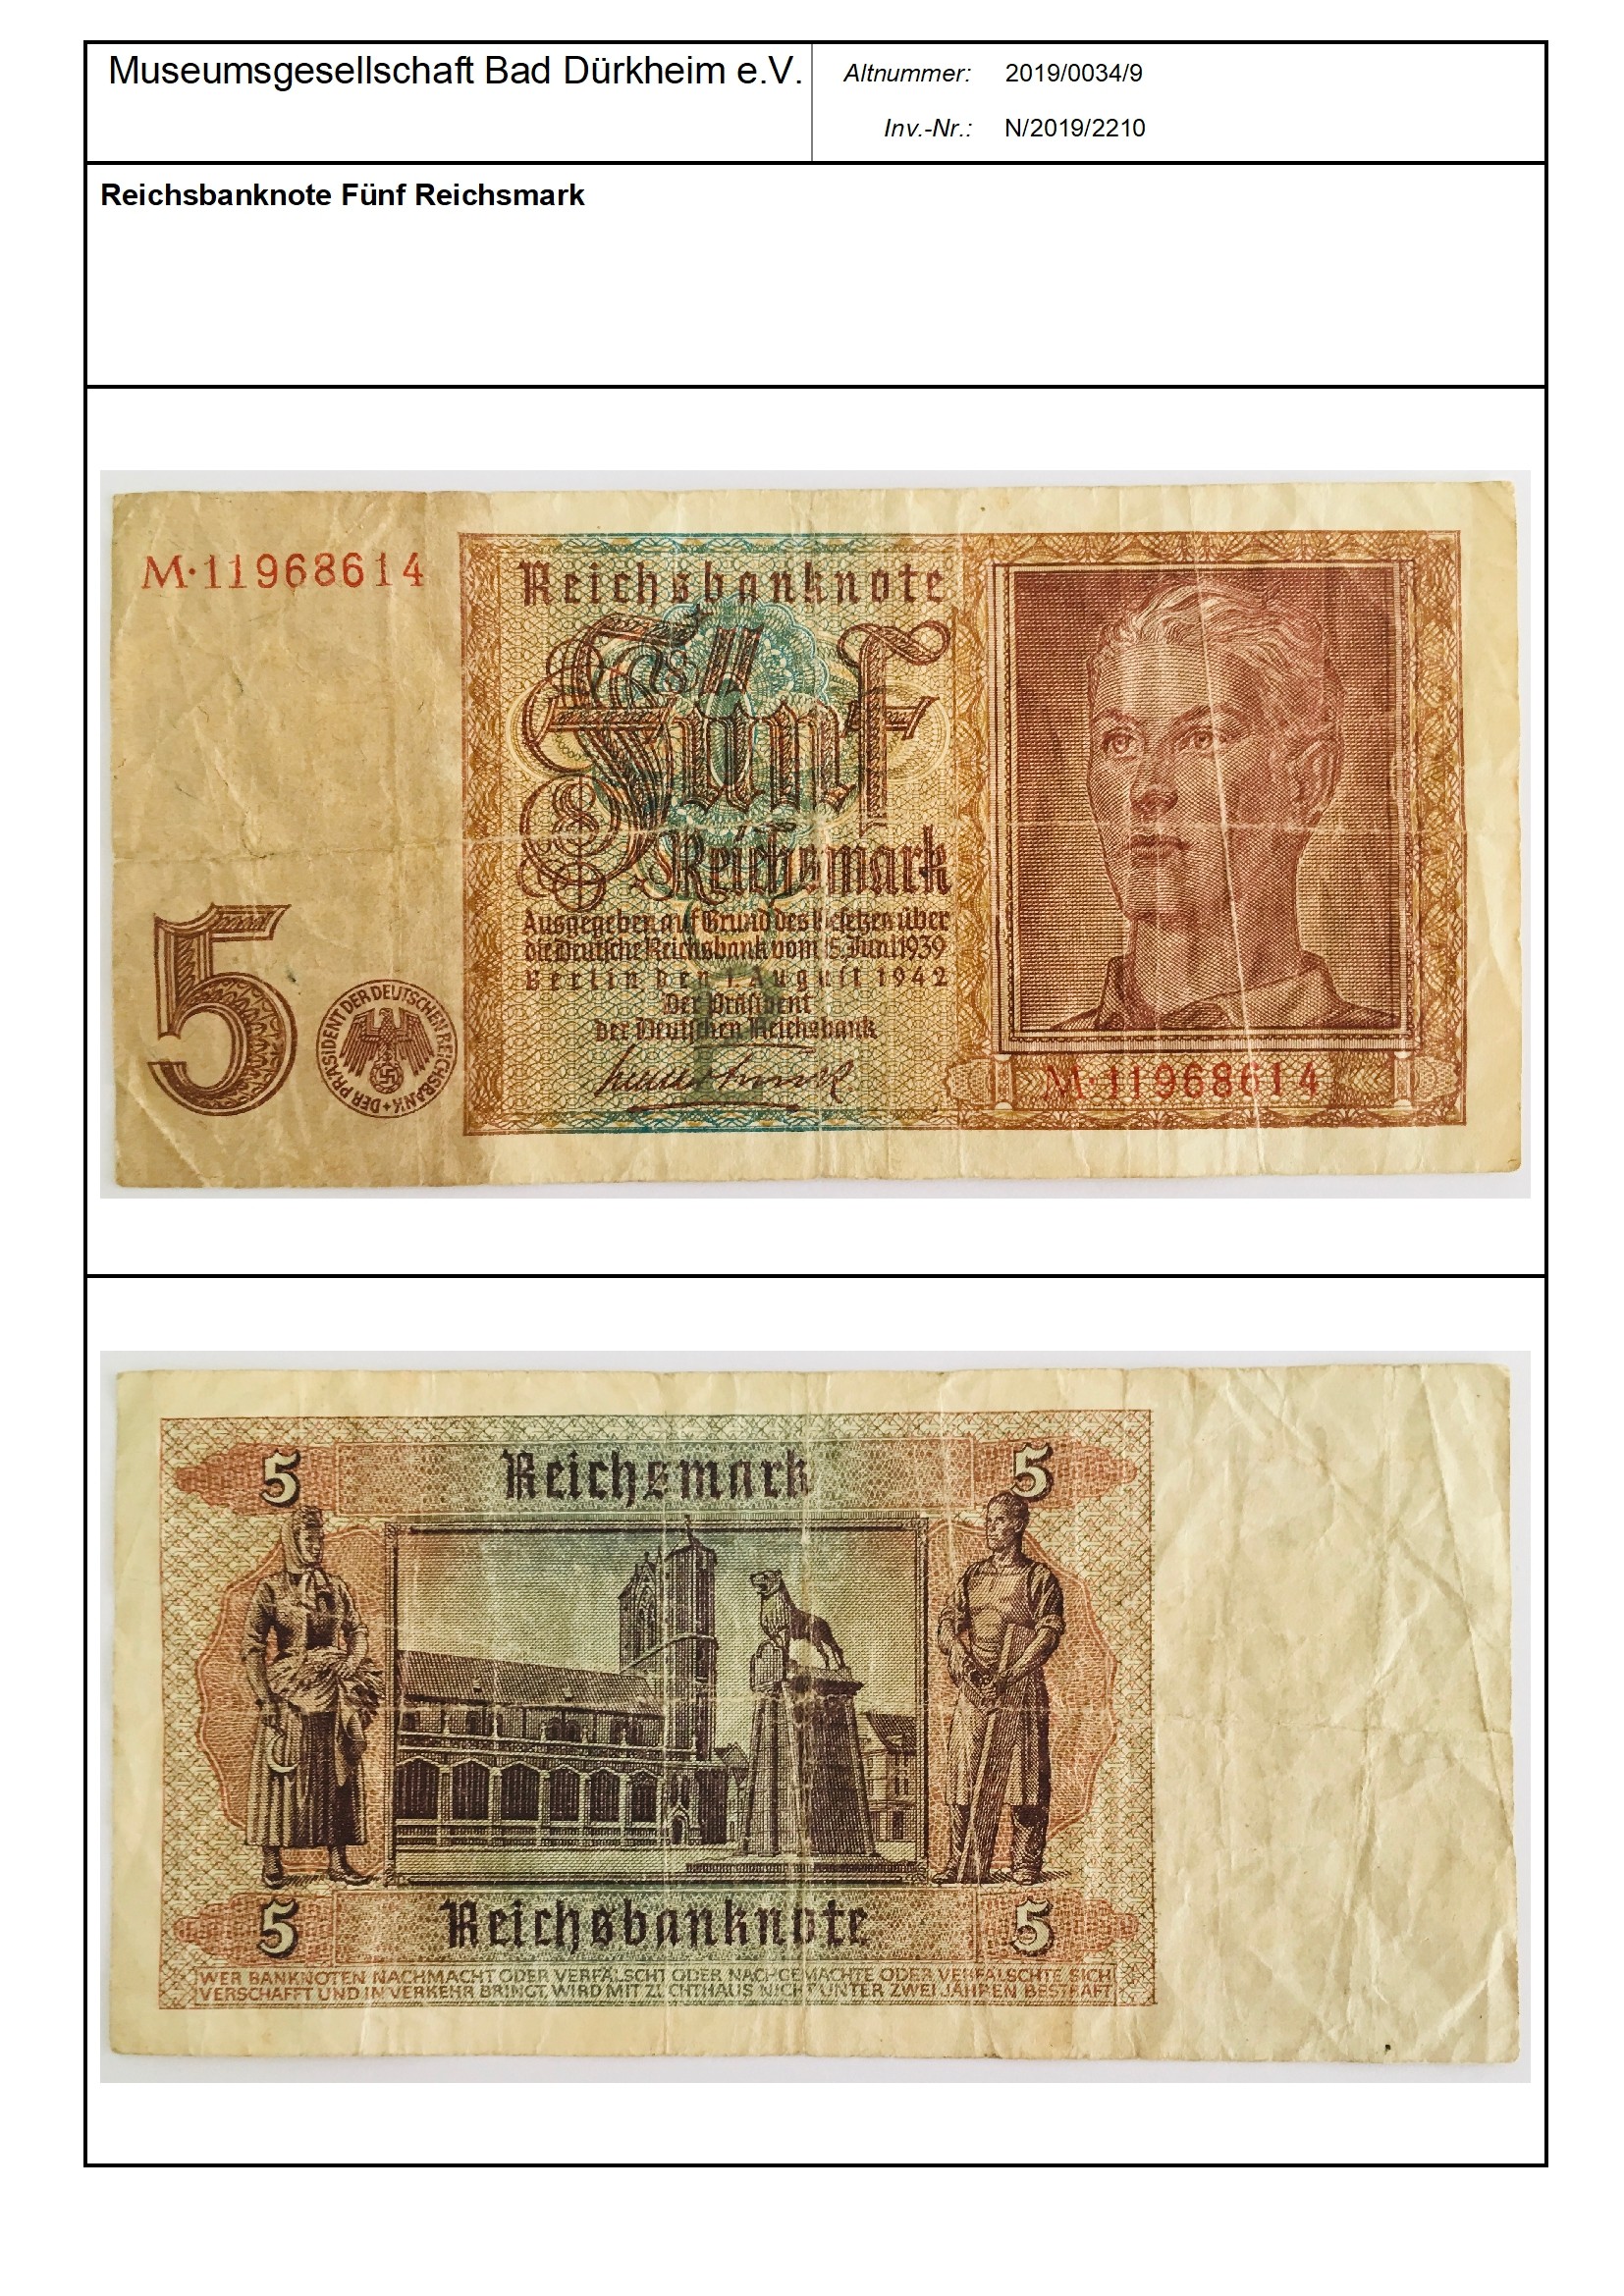 Reichsbanknote Fünf Reichsmark
Serien-Nummer: M*11968614 (Museumsgesellschaft Bad Dürkheim e.V. CC BY-NC-SA)